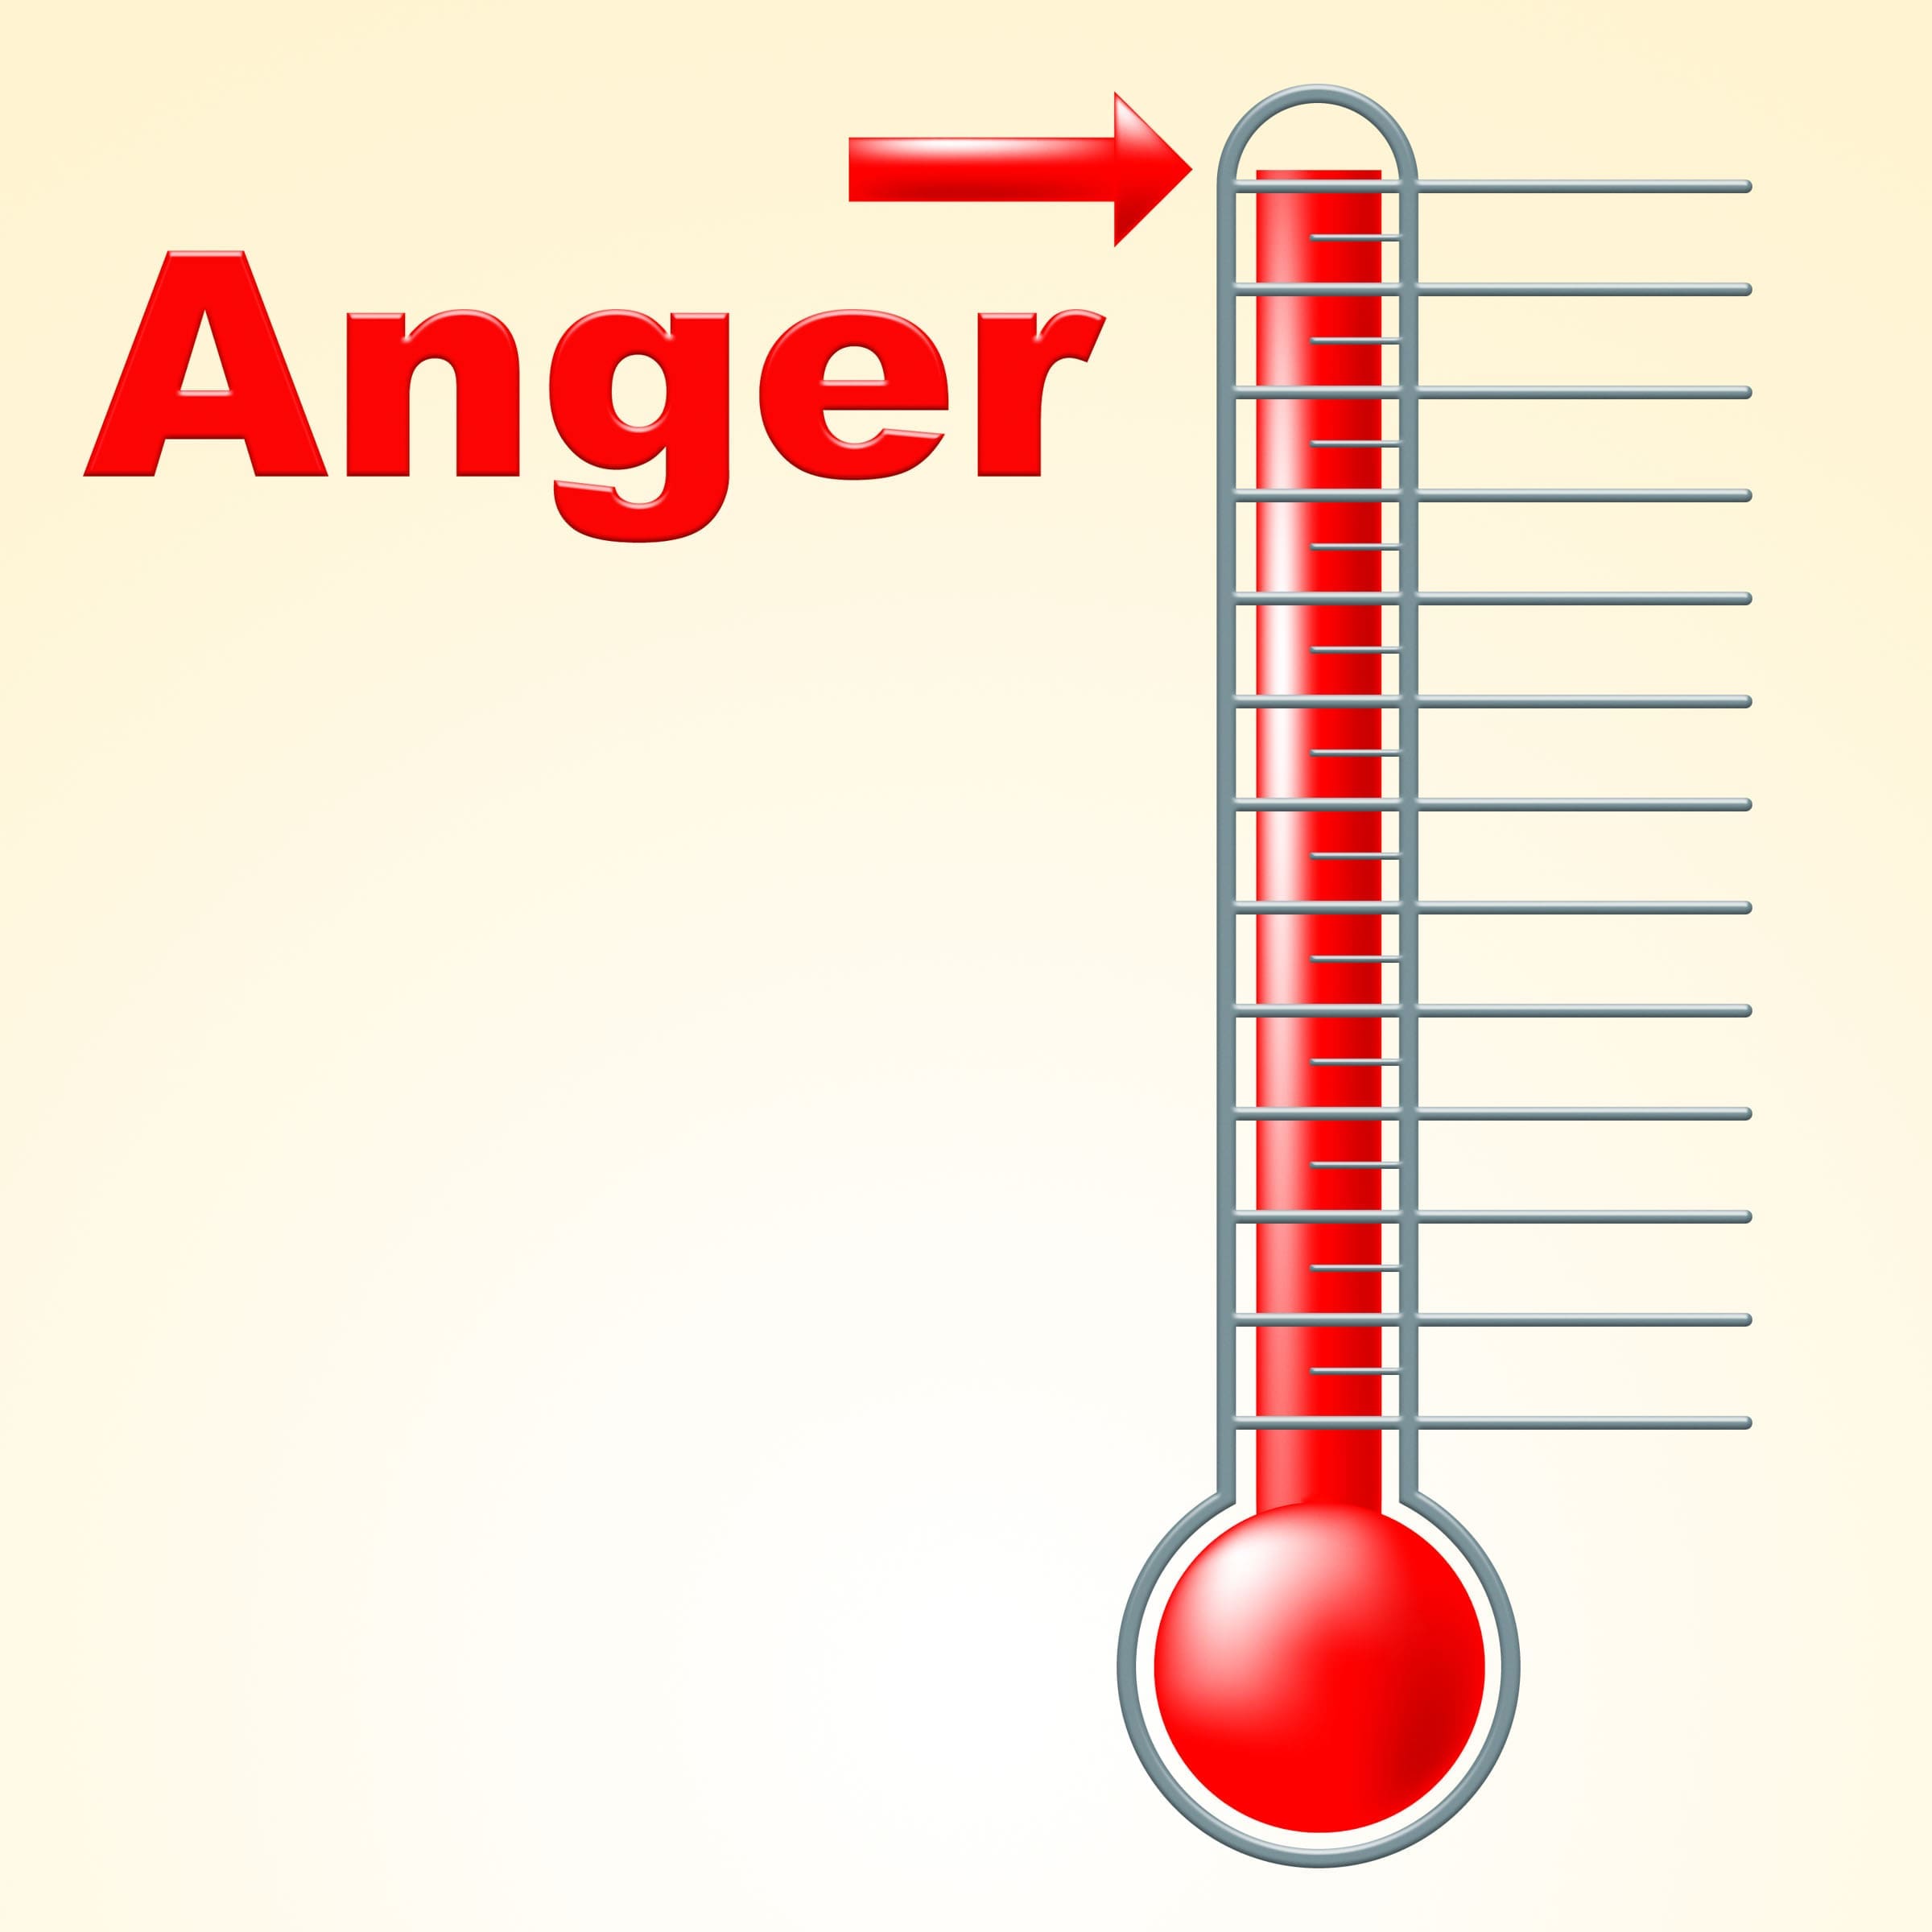 Anger - Negative Emotions at Work